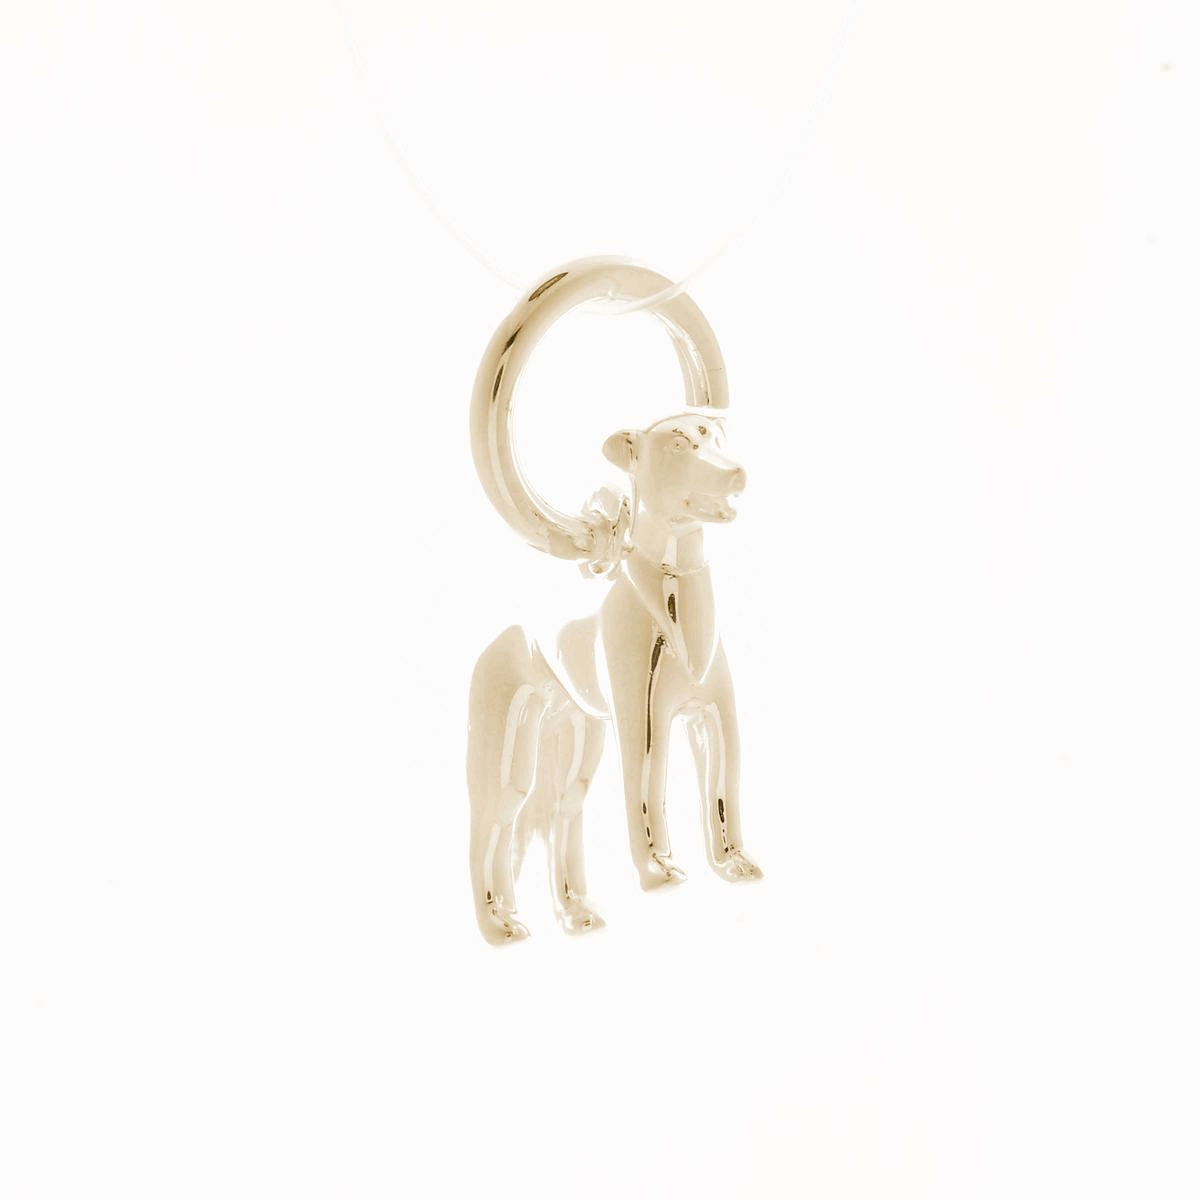 solid 9k 9 carat gold whippet greyhound dog charm scarlett jewellery Brighton UK